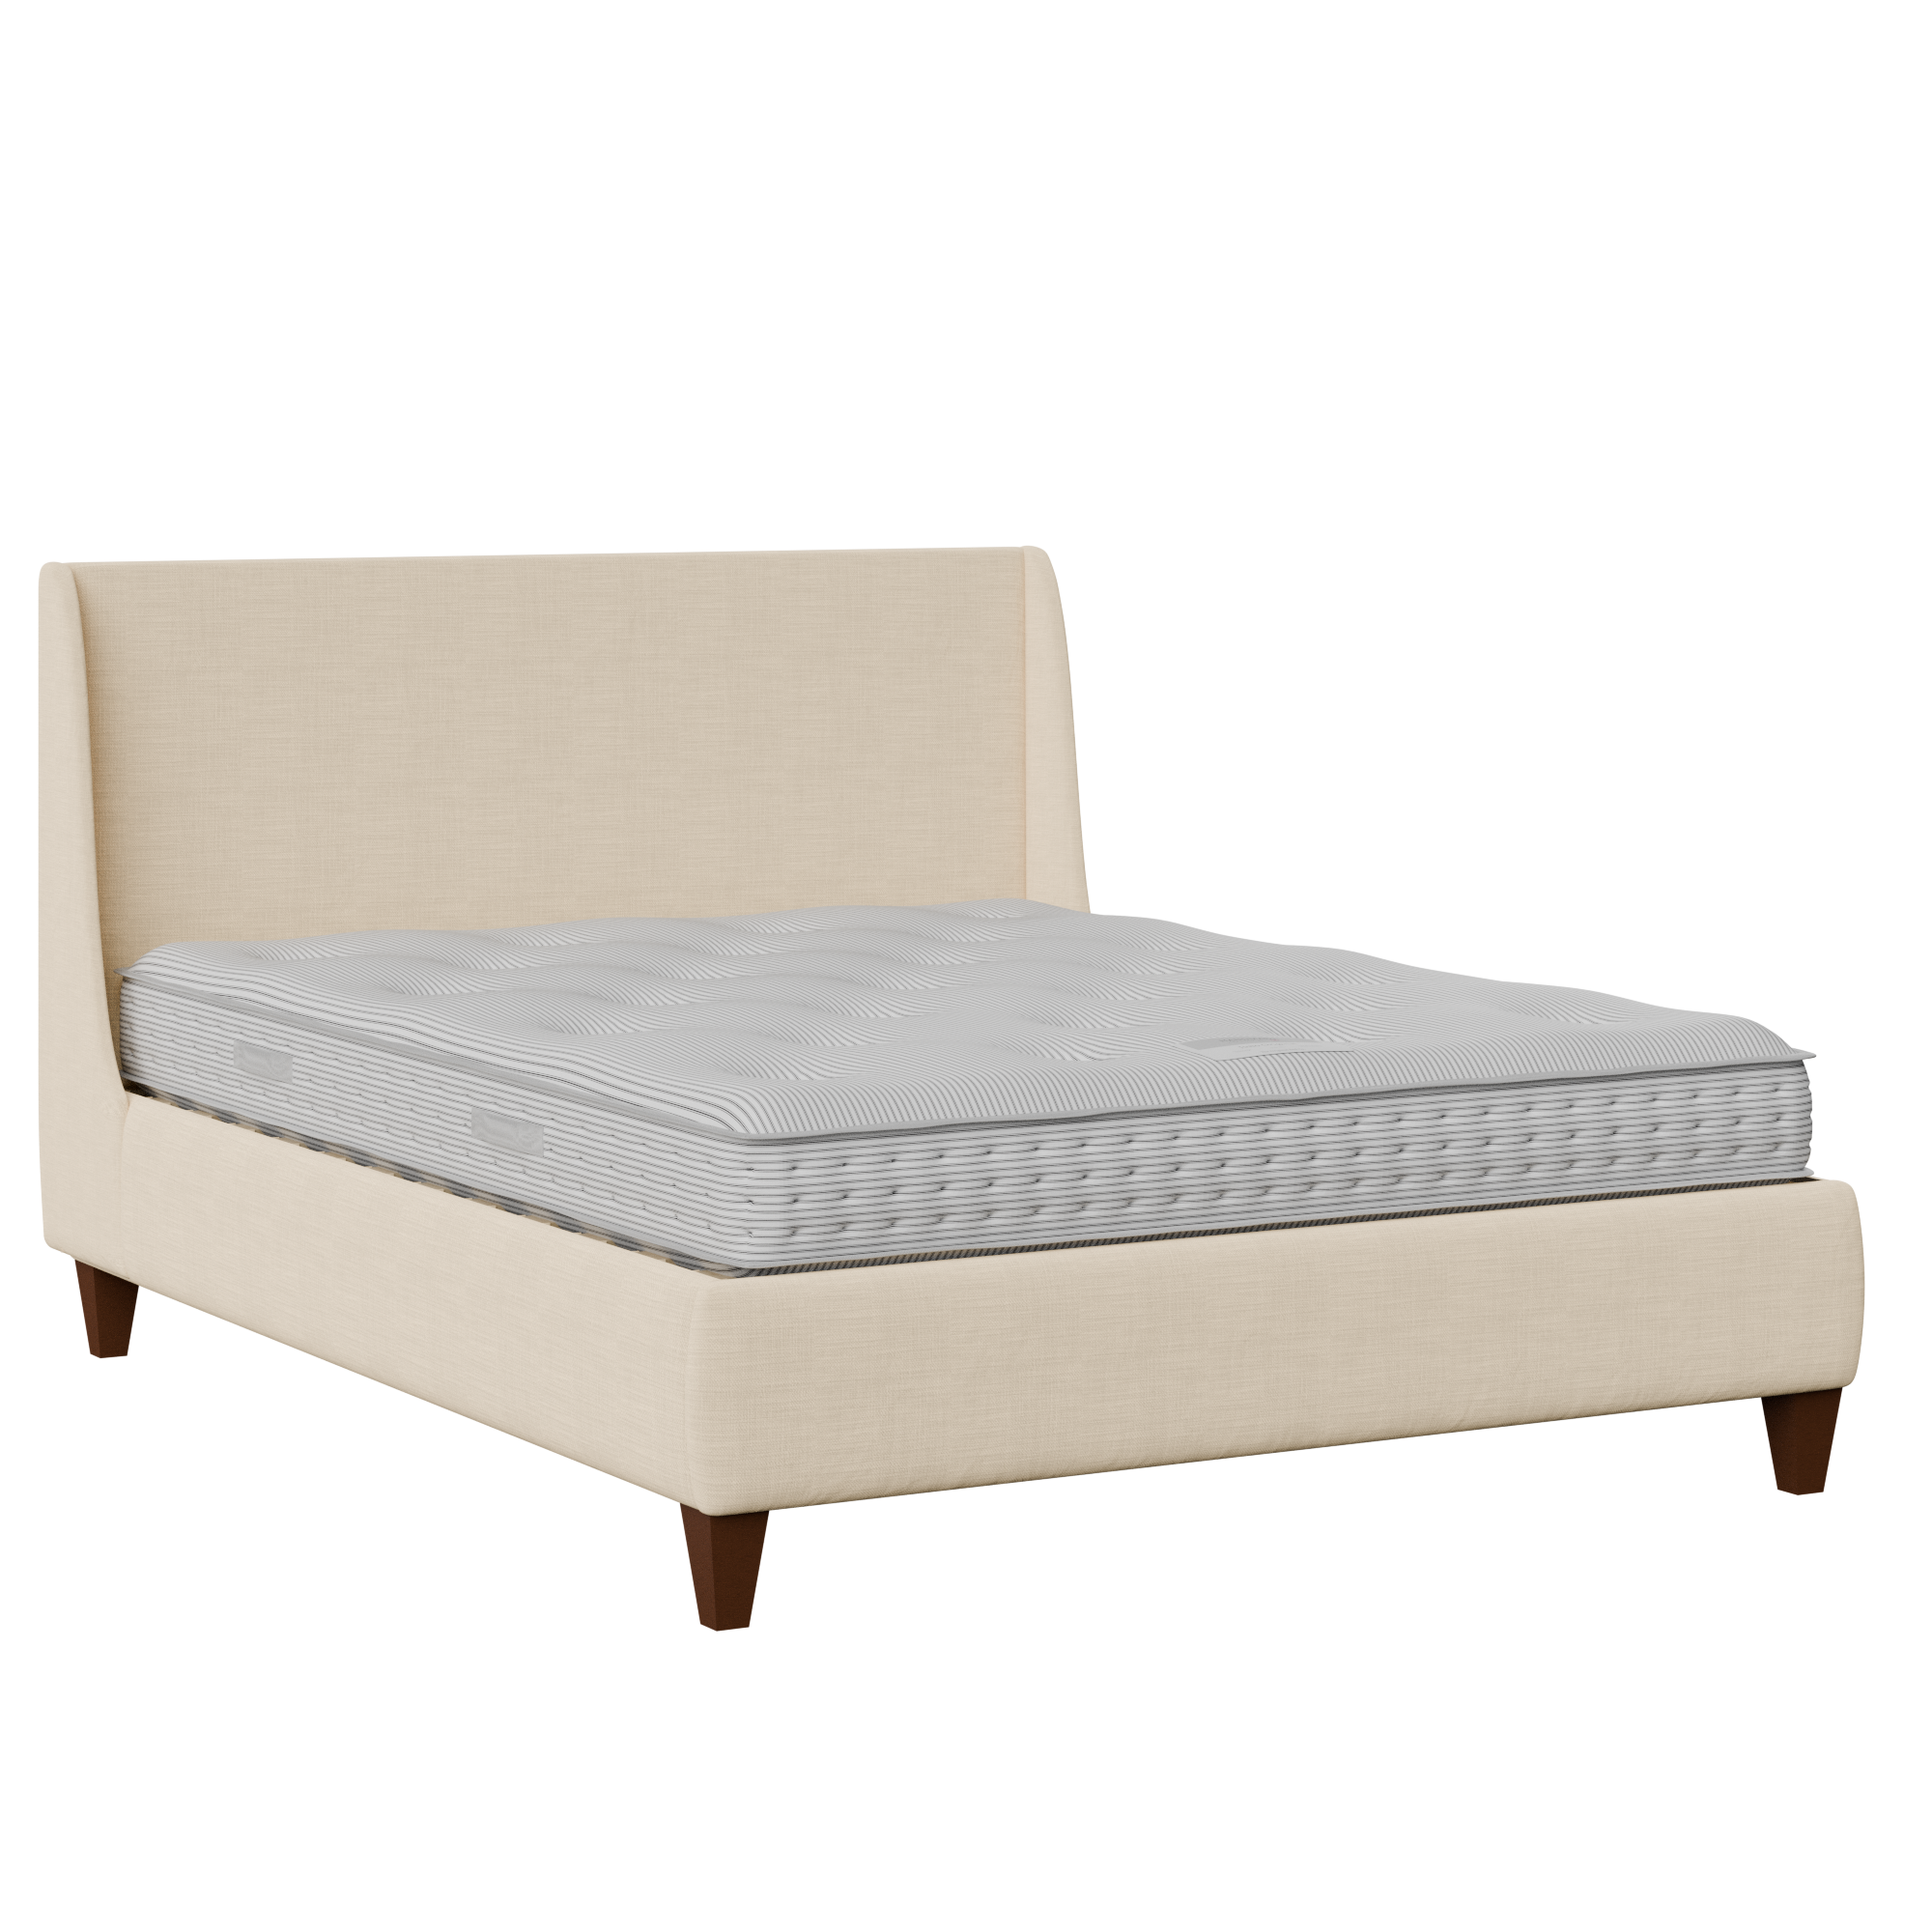 Sunderland upholstered bed in natural fabric